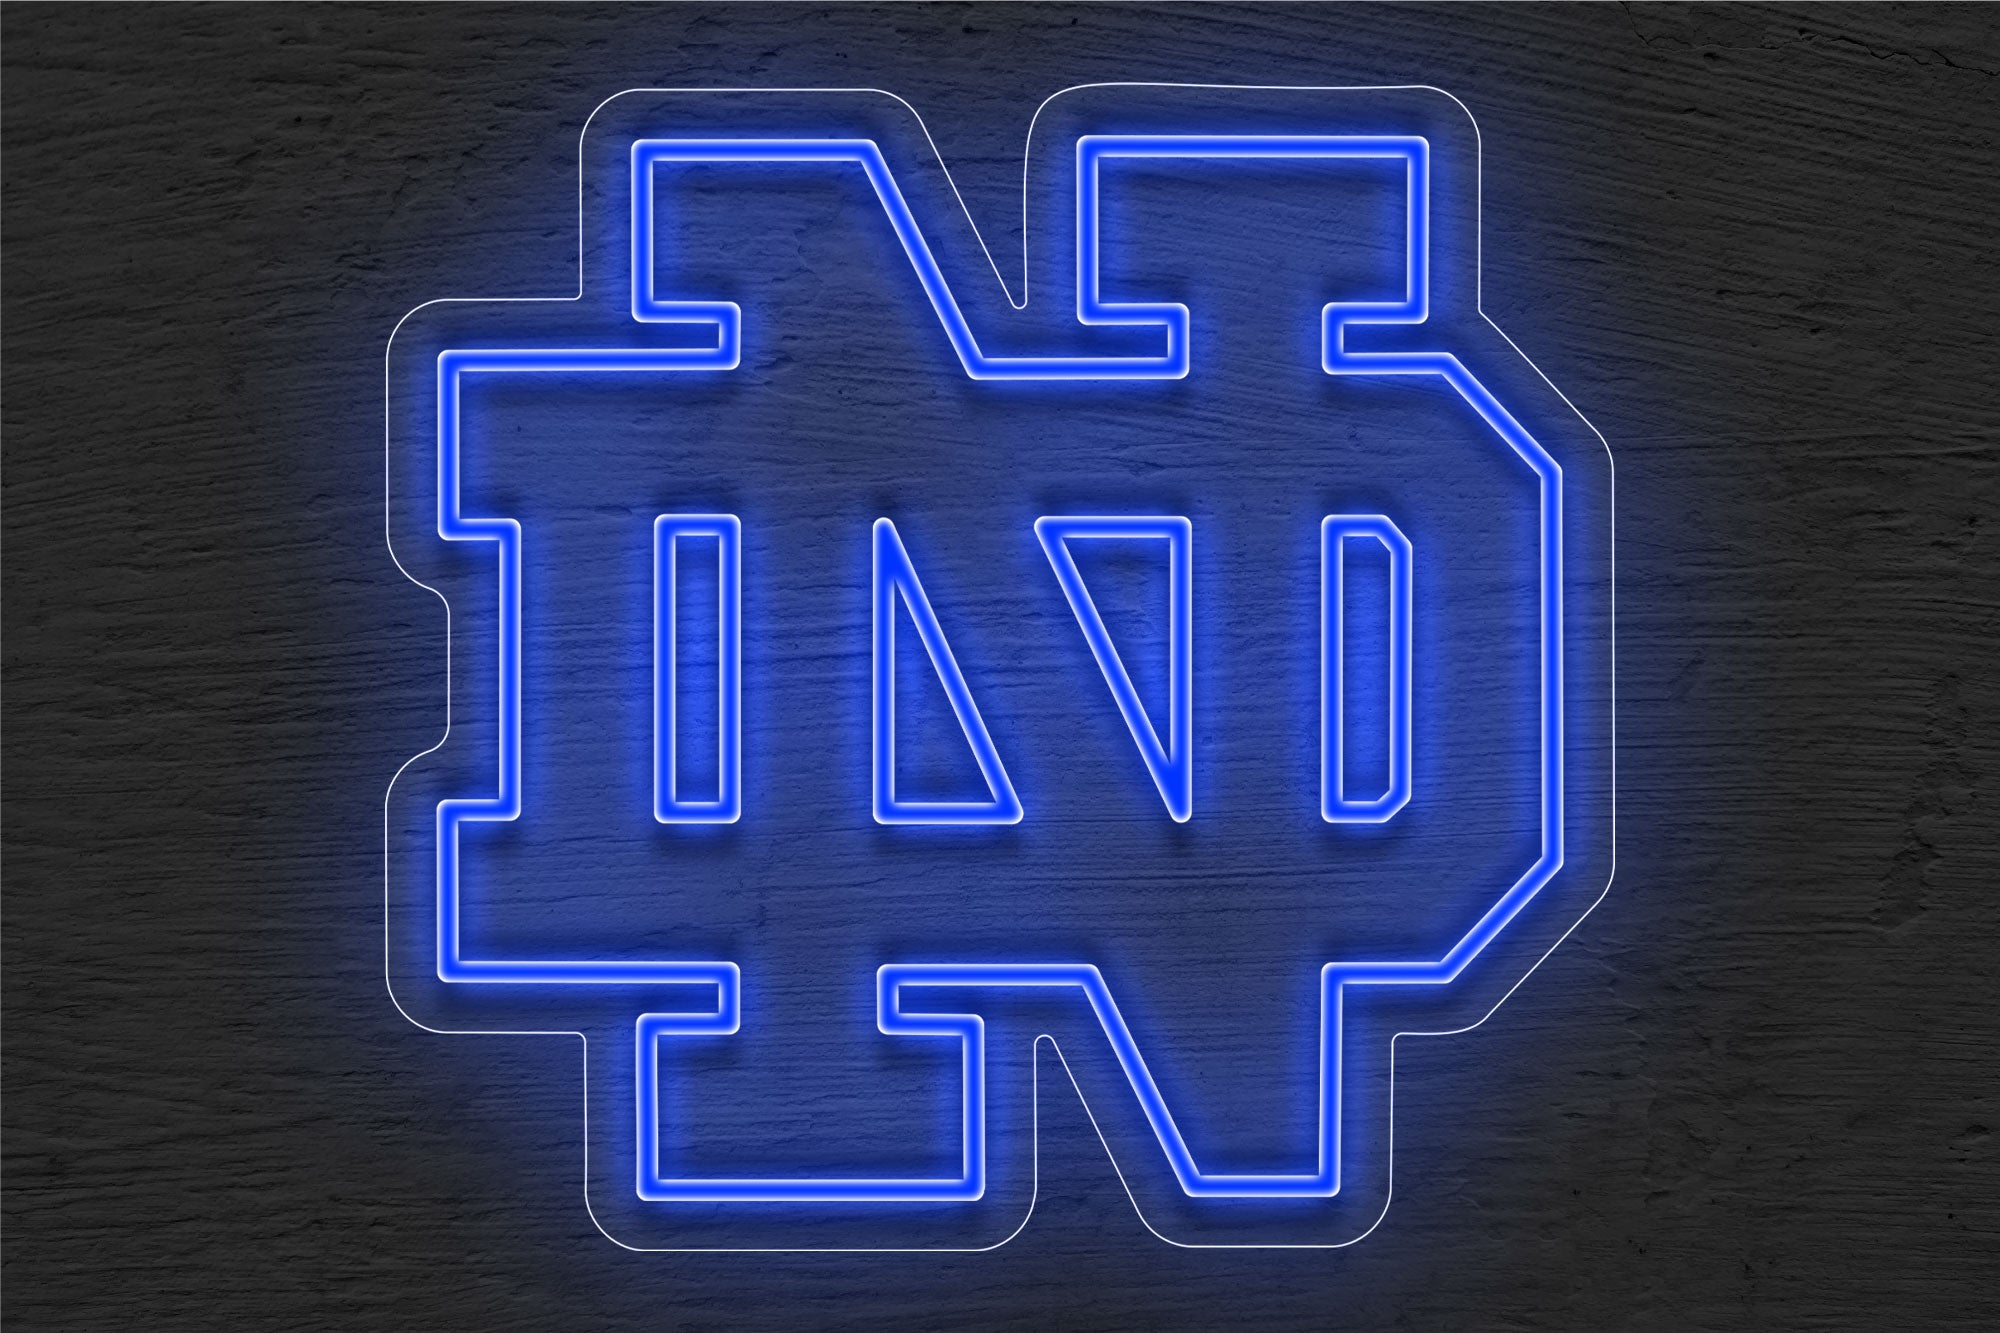 ND Logo by Creative Designer on Dribbble